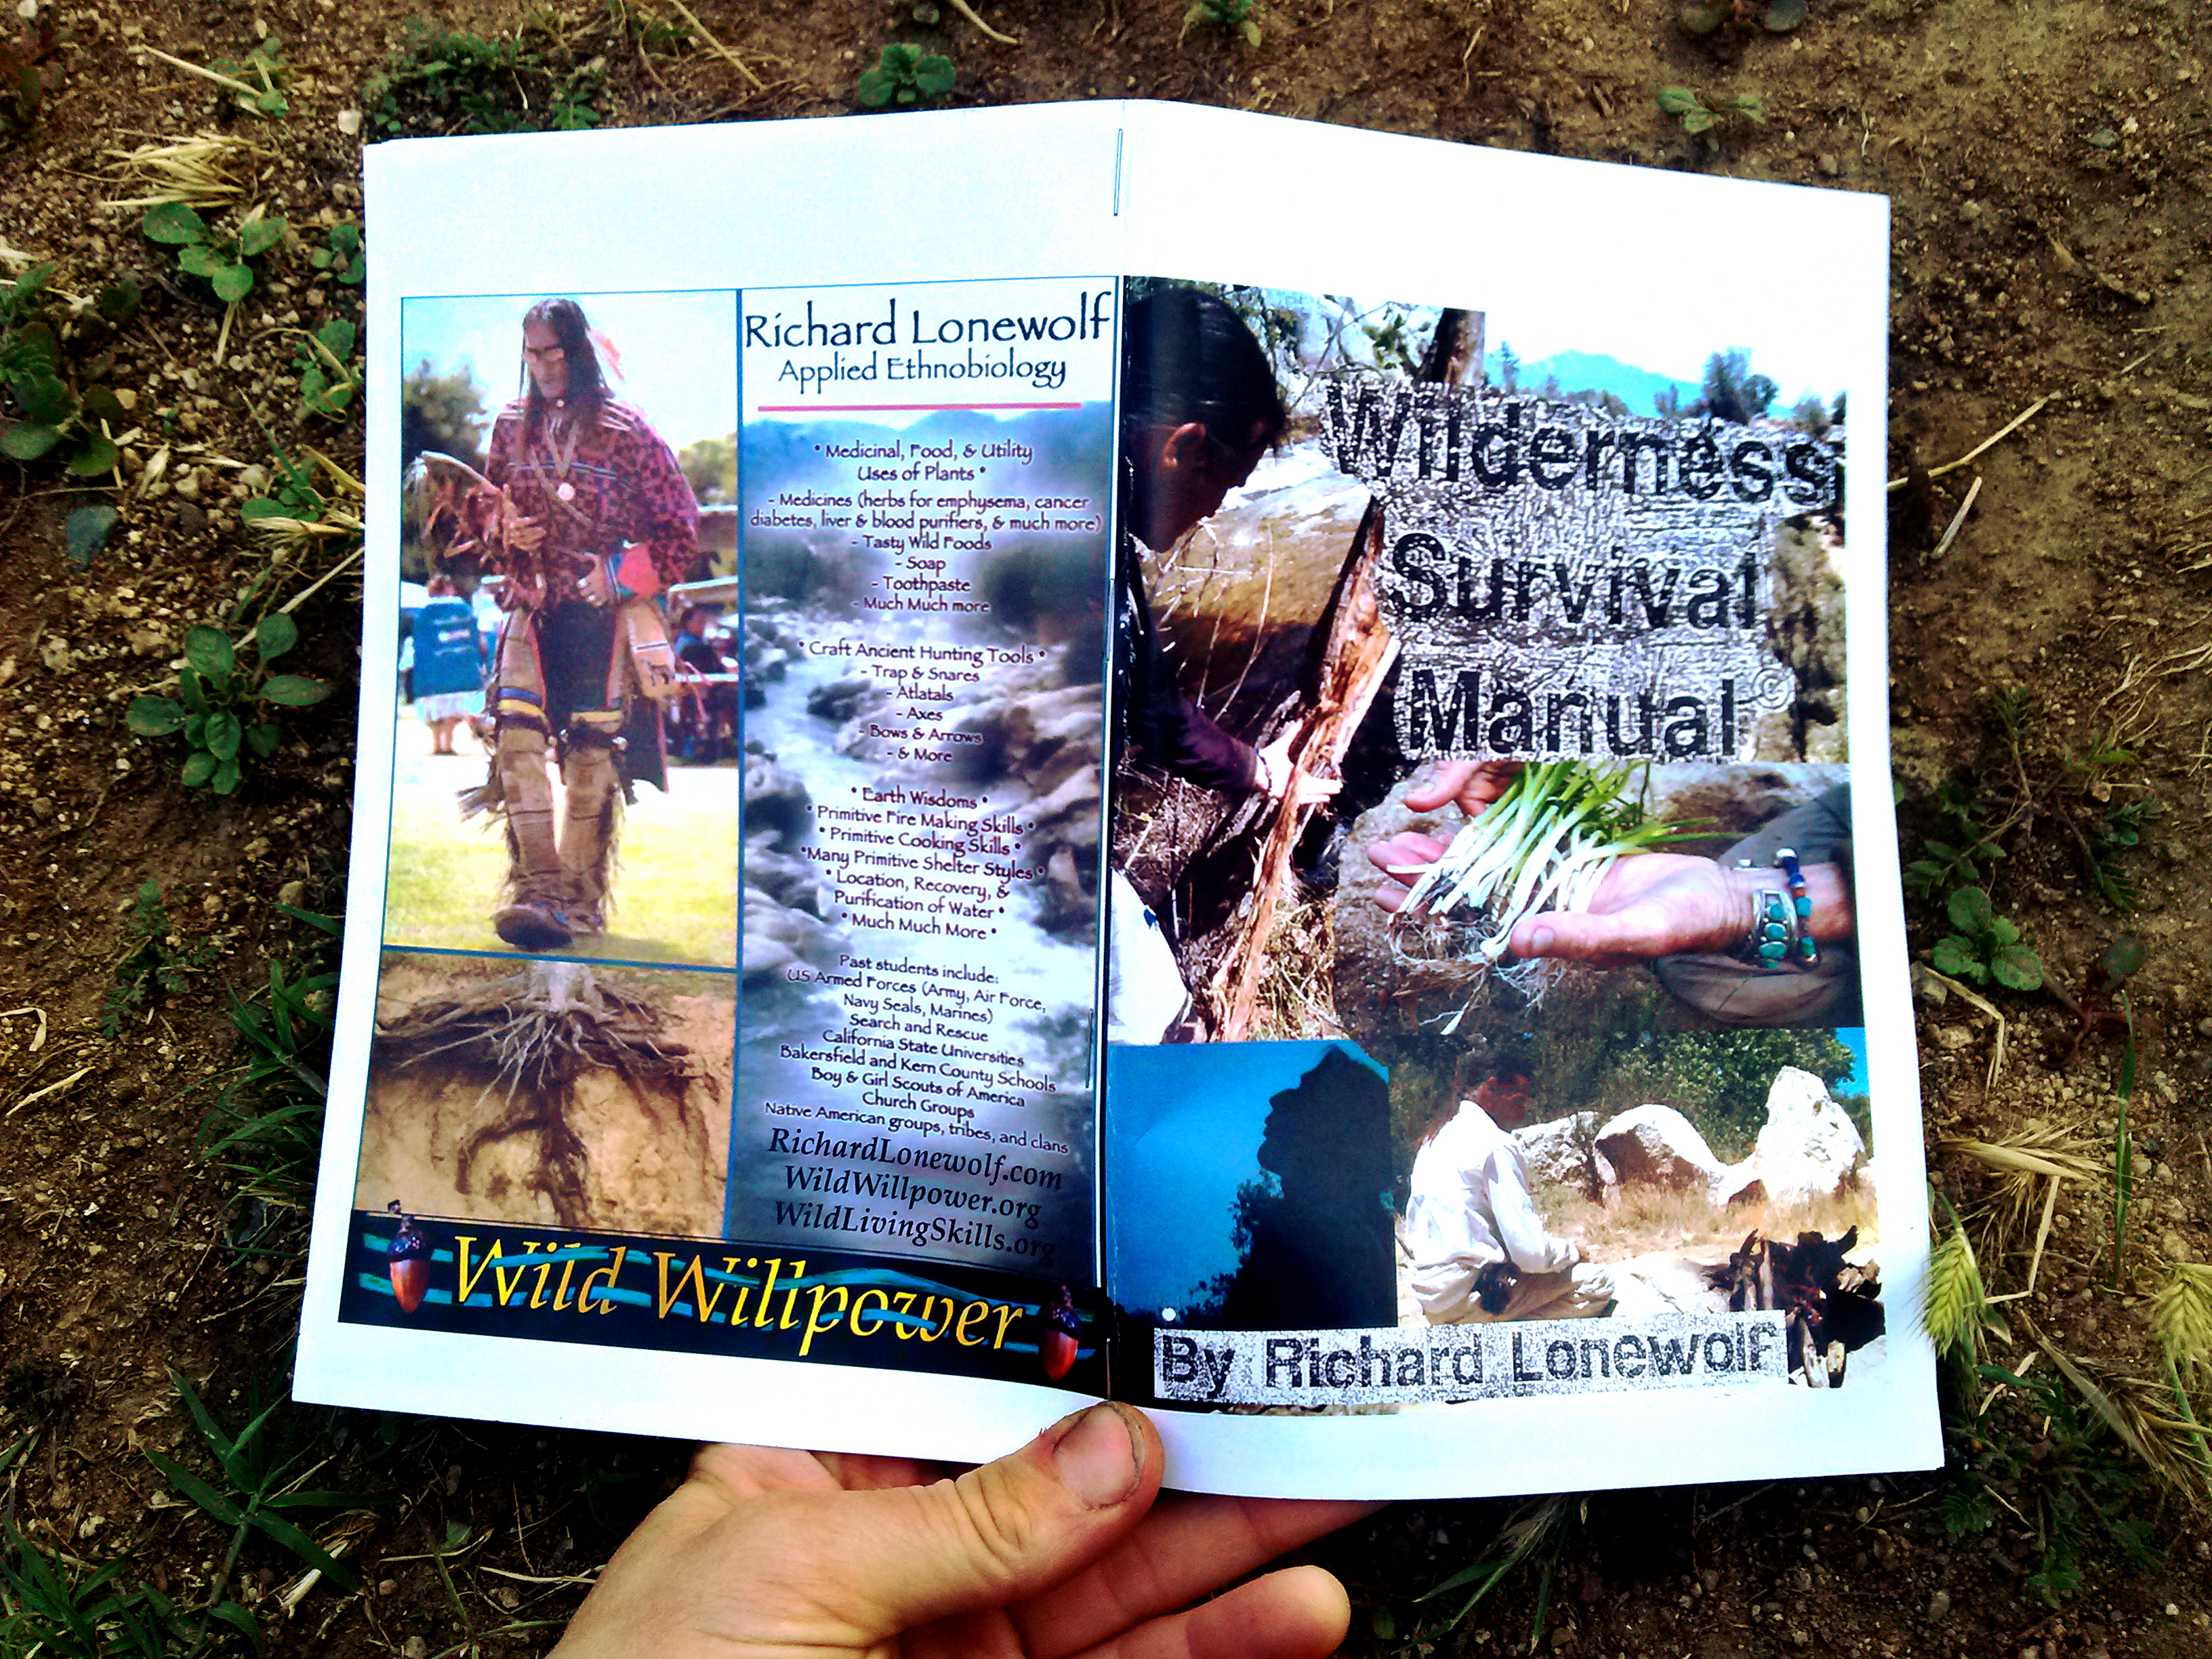 Wilderness Survival Guide - modern and primitive skills